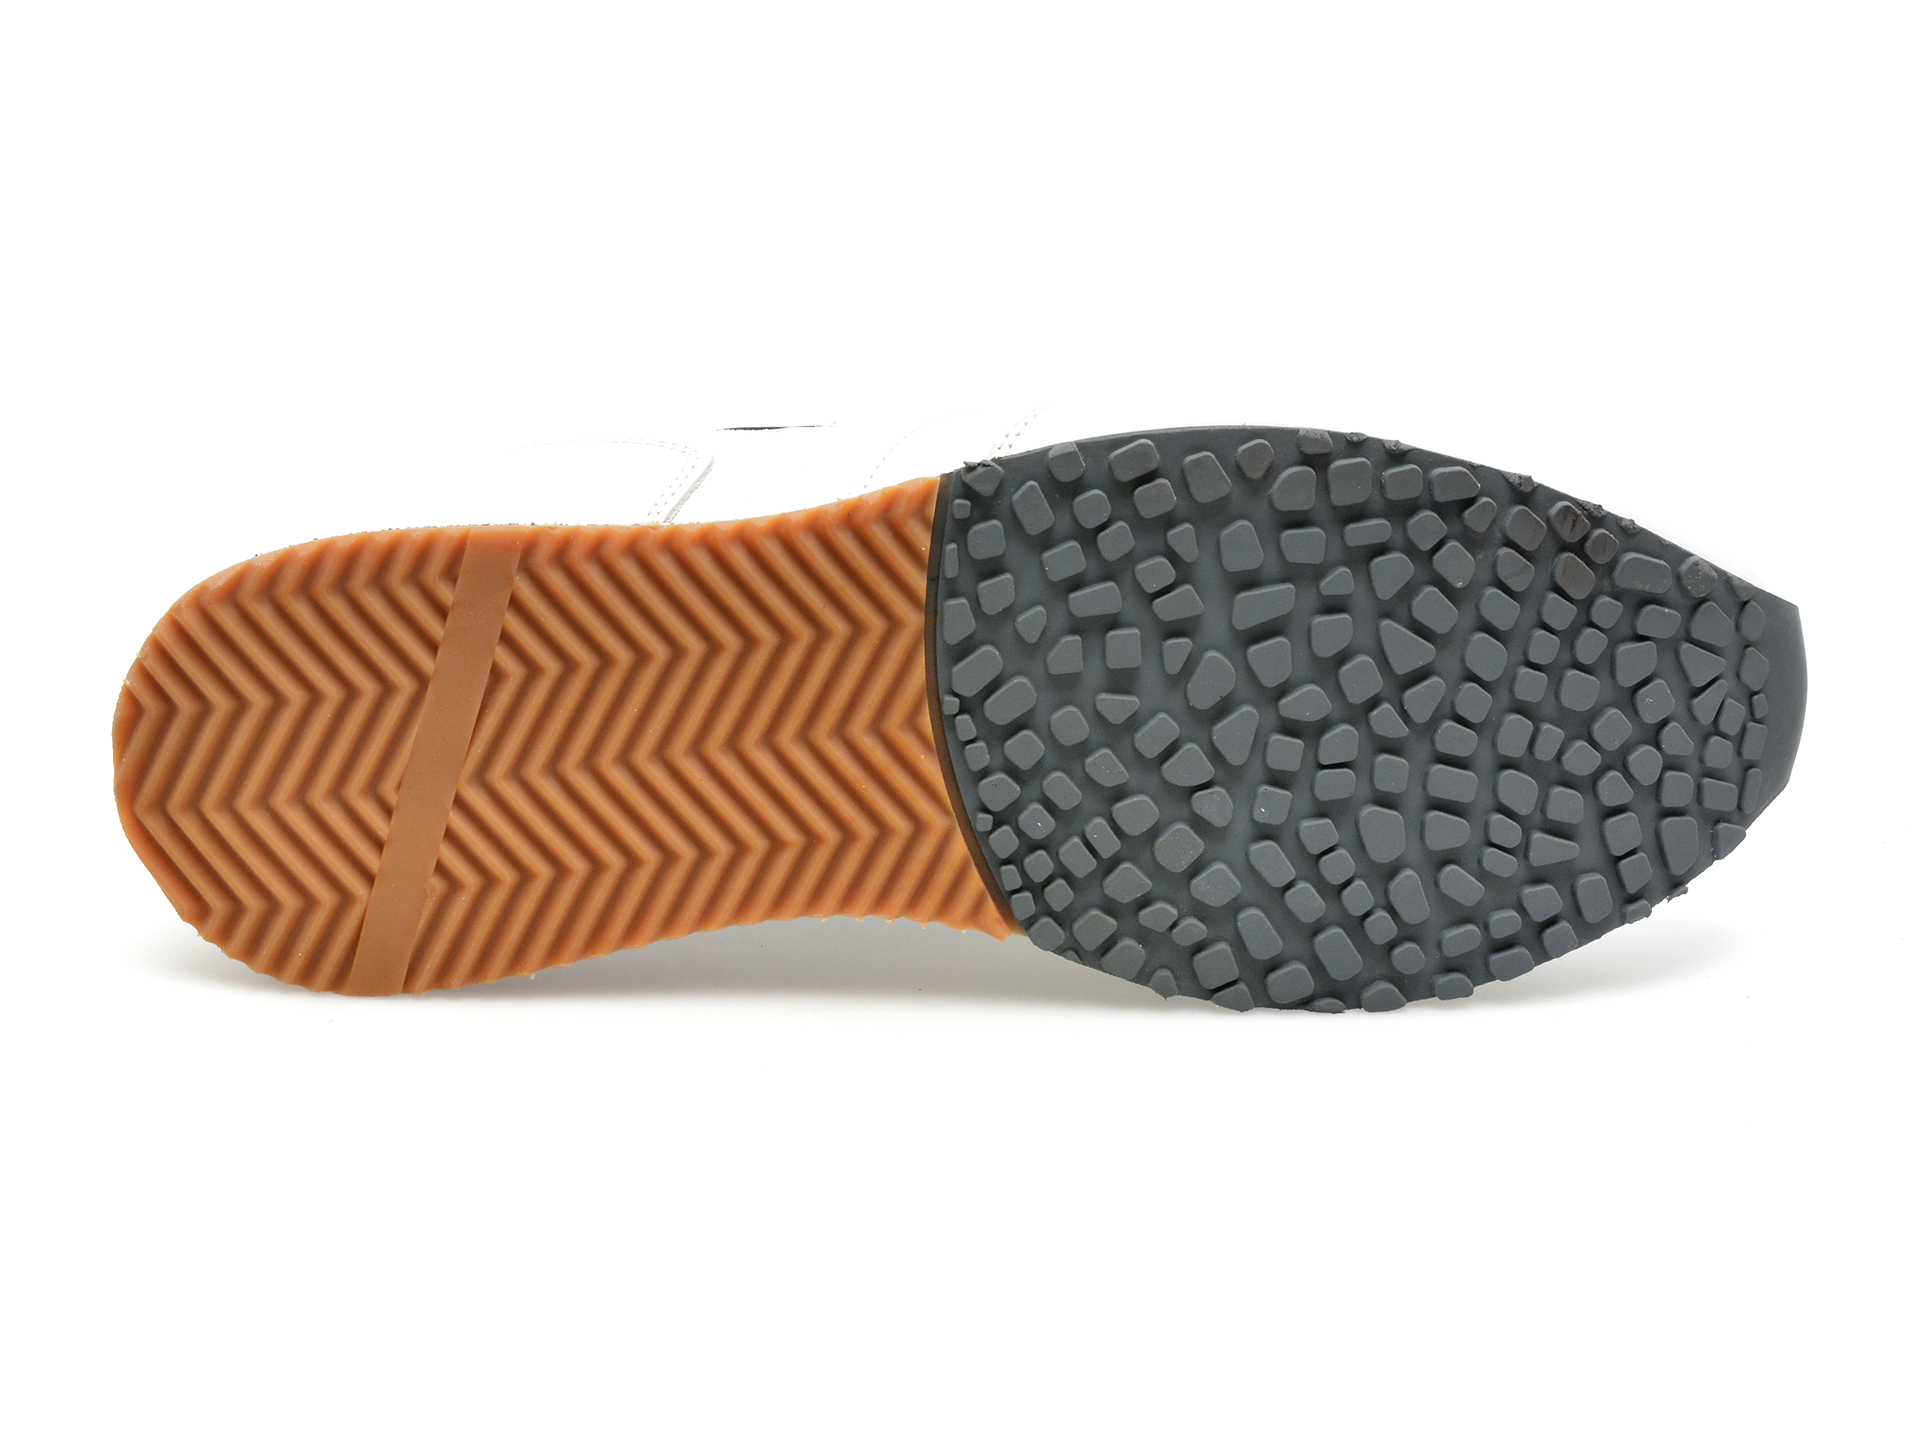 Pantofi EPICA albi, 3476, din piele naturala